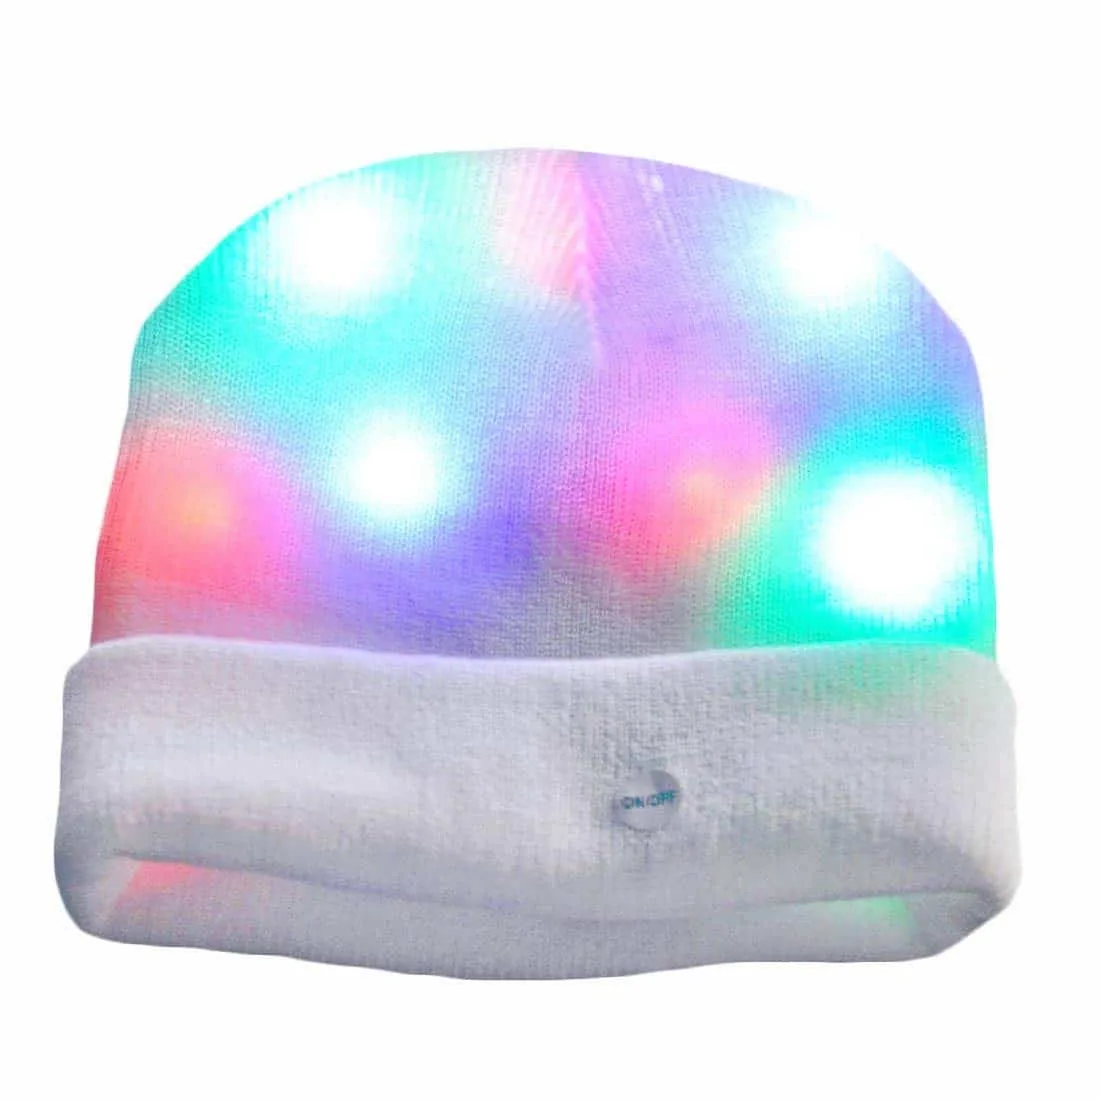 LED lighted hat